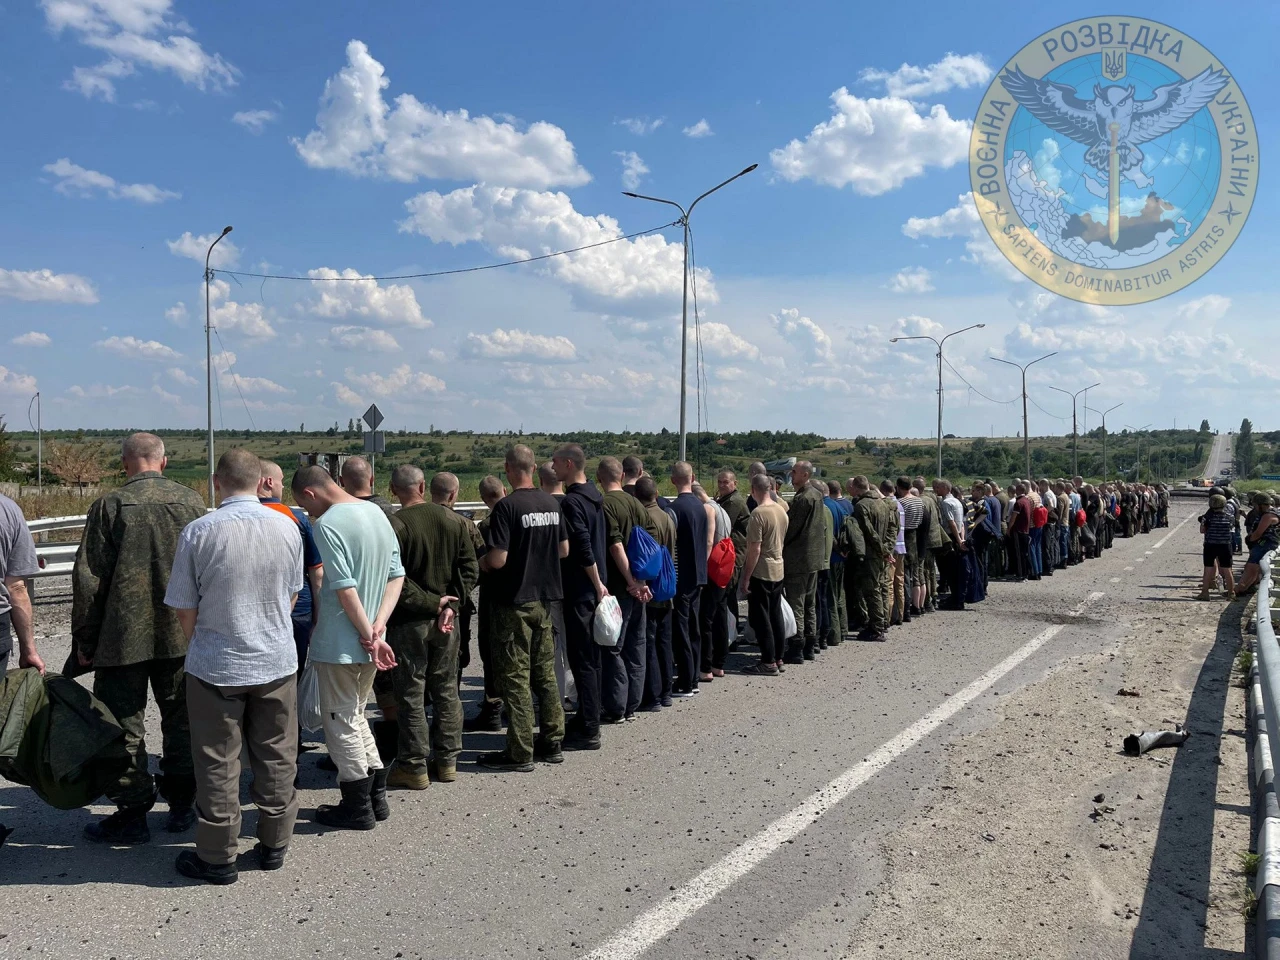 Images Show Captured Ukrainian Troops Returning Home – Many Injured